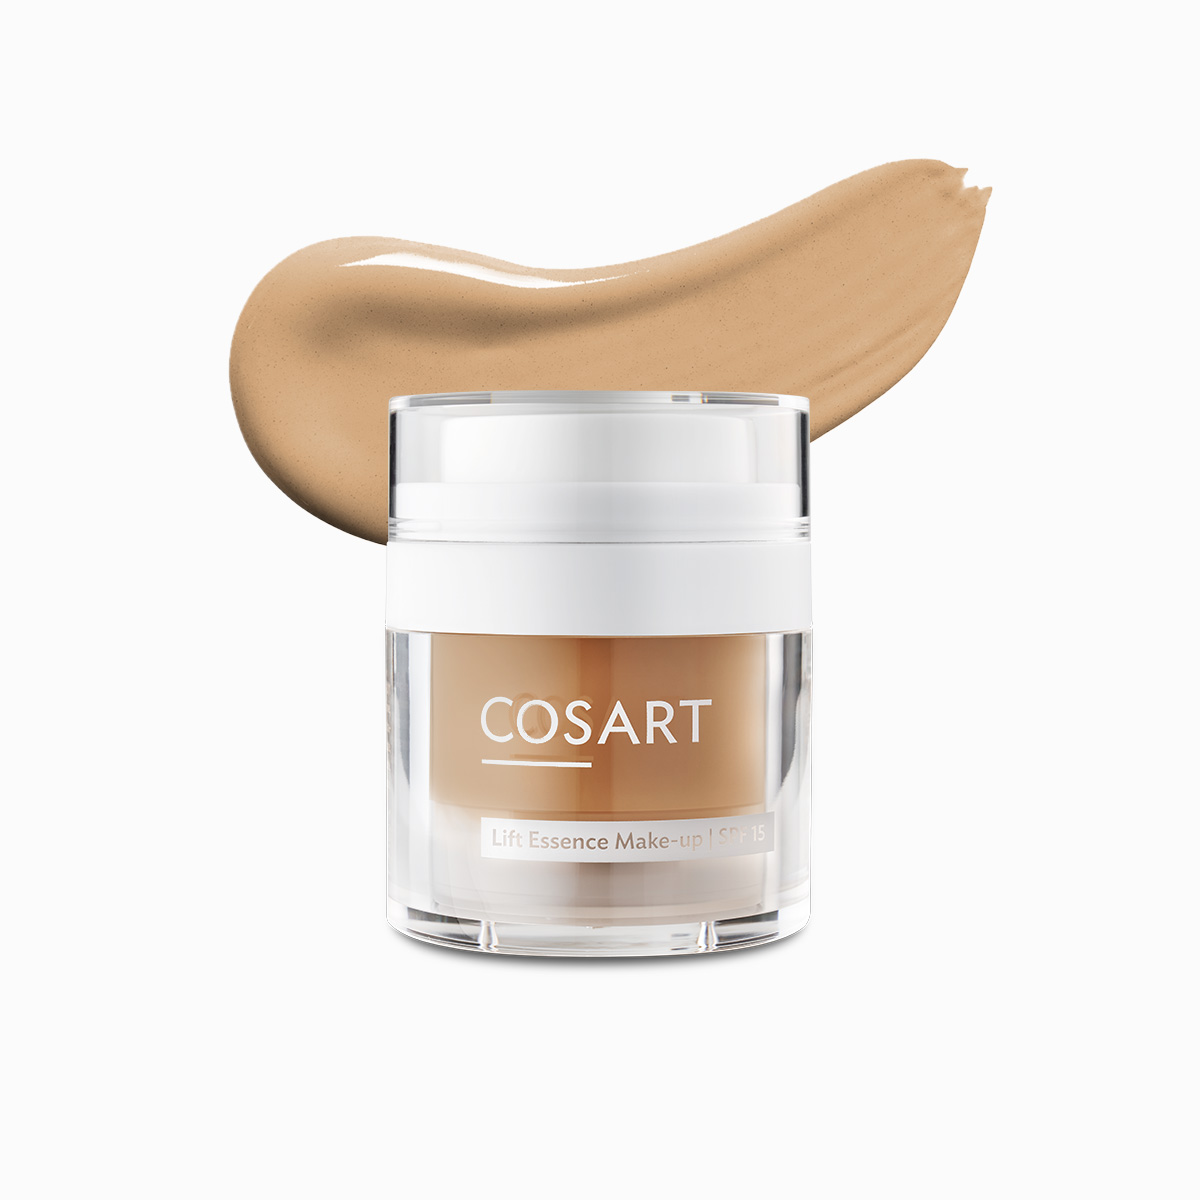 COSART Lift Essence Make-up SPF 15 - Caramel (791) 30 ml